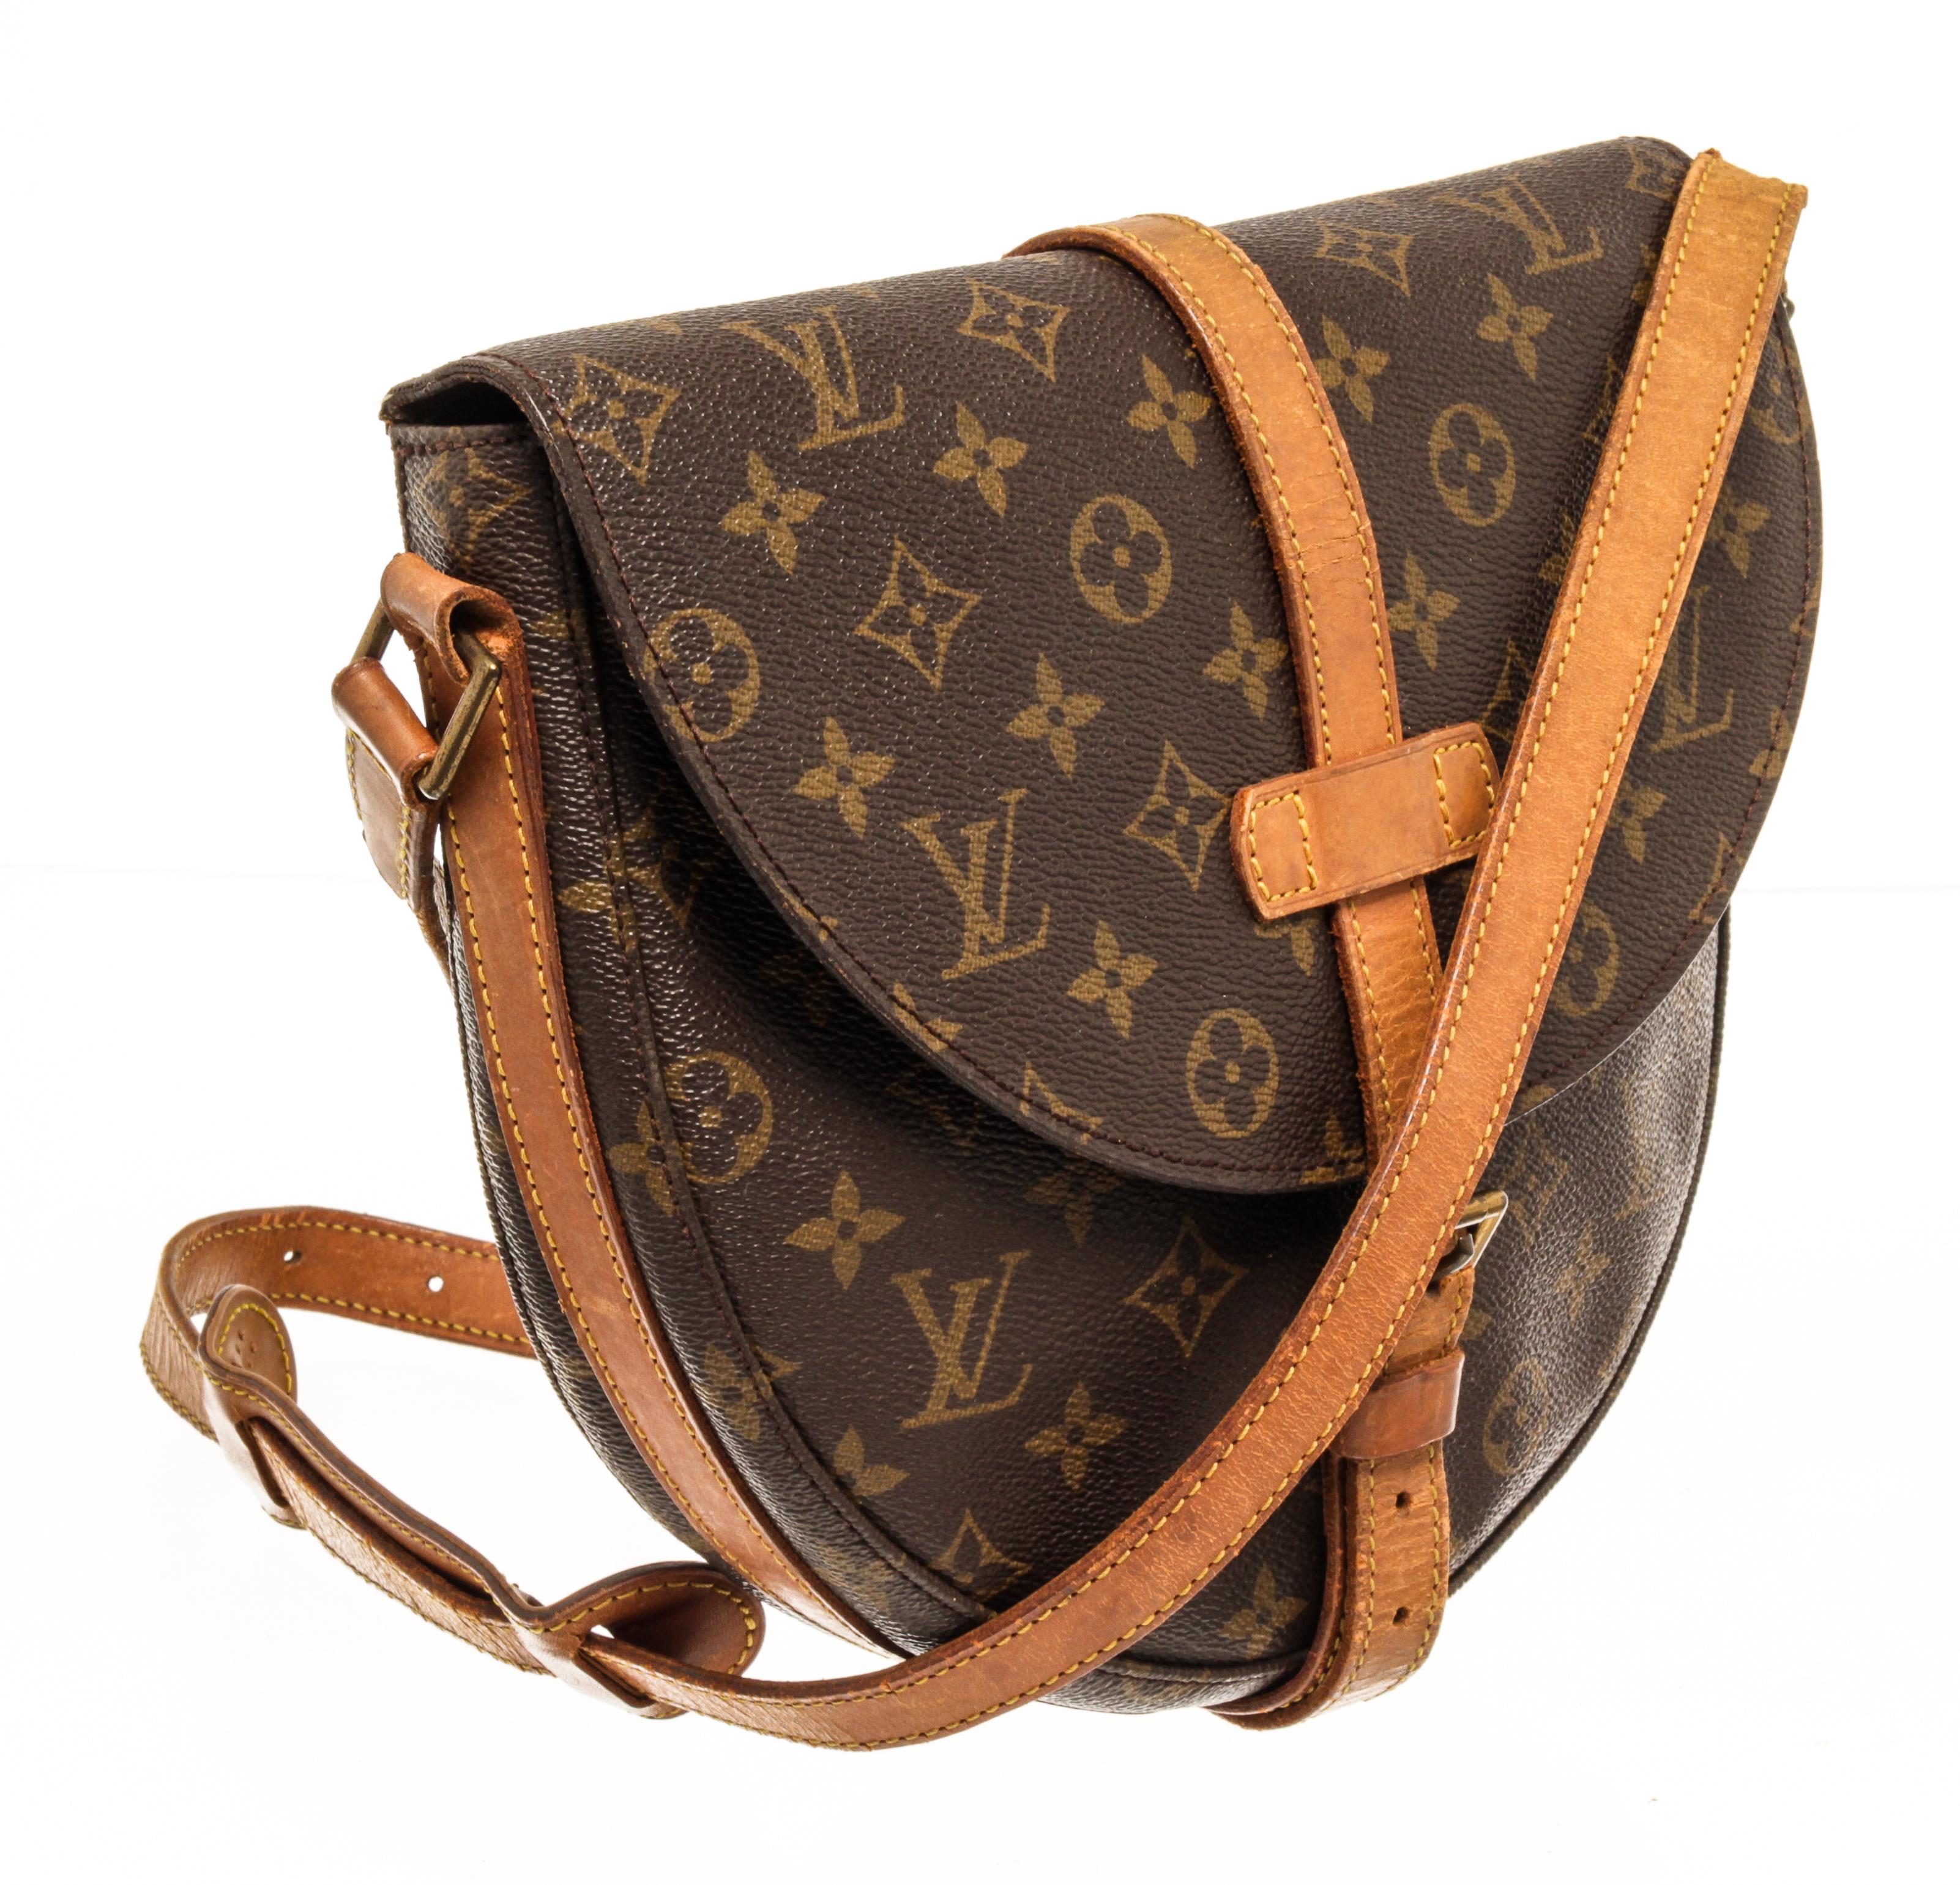 Louis Vuitton Monogram Chantilly GM crossbody bag with brown leather interior, one zip interior pocket, adjustable strap, gold hardware, flap closure.

74650MSC